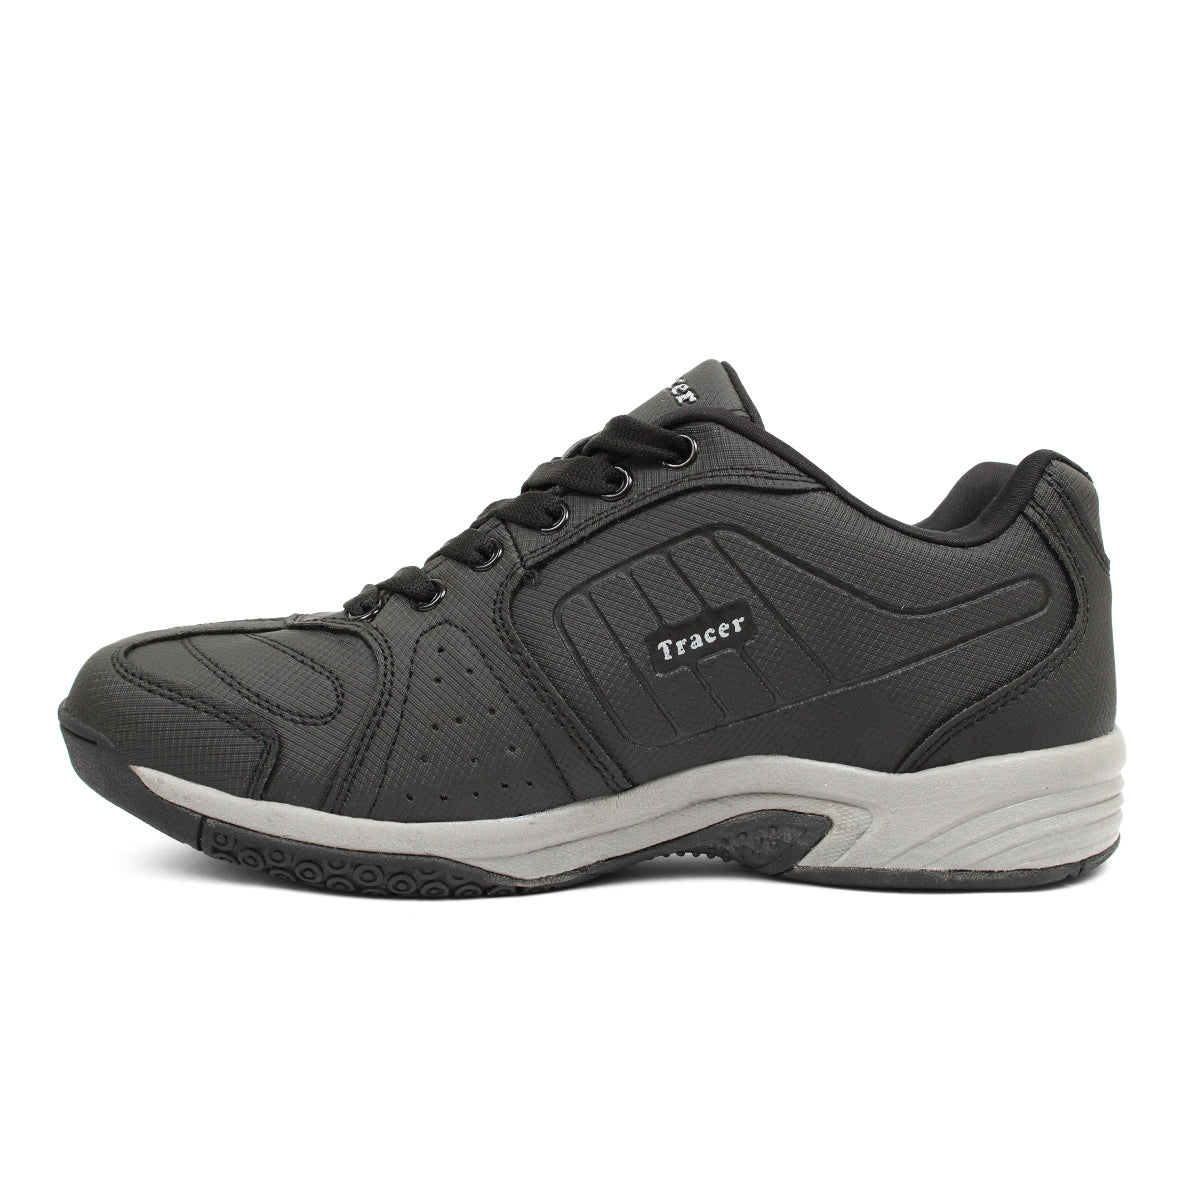 Tennis Shoes for Men Black Grey